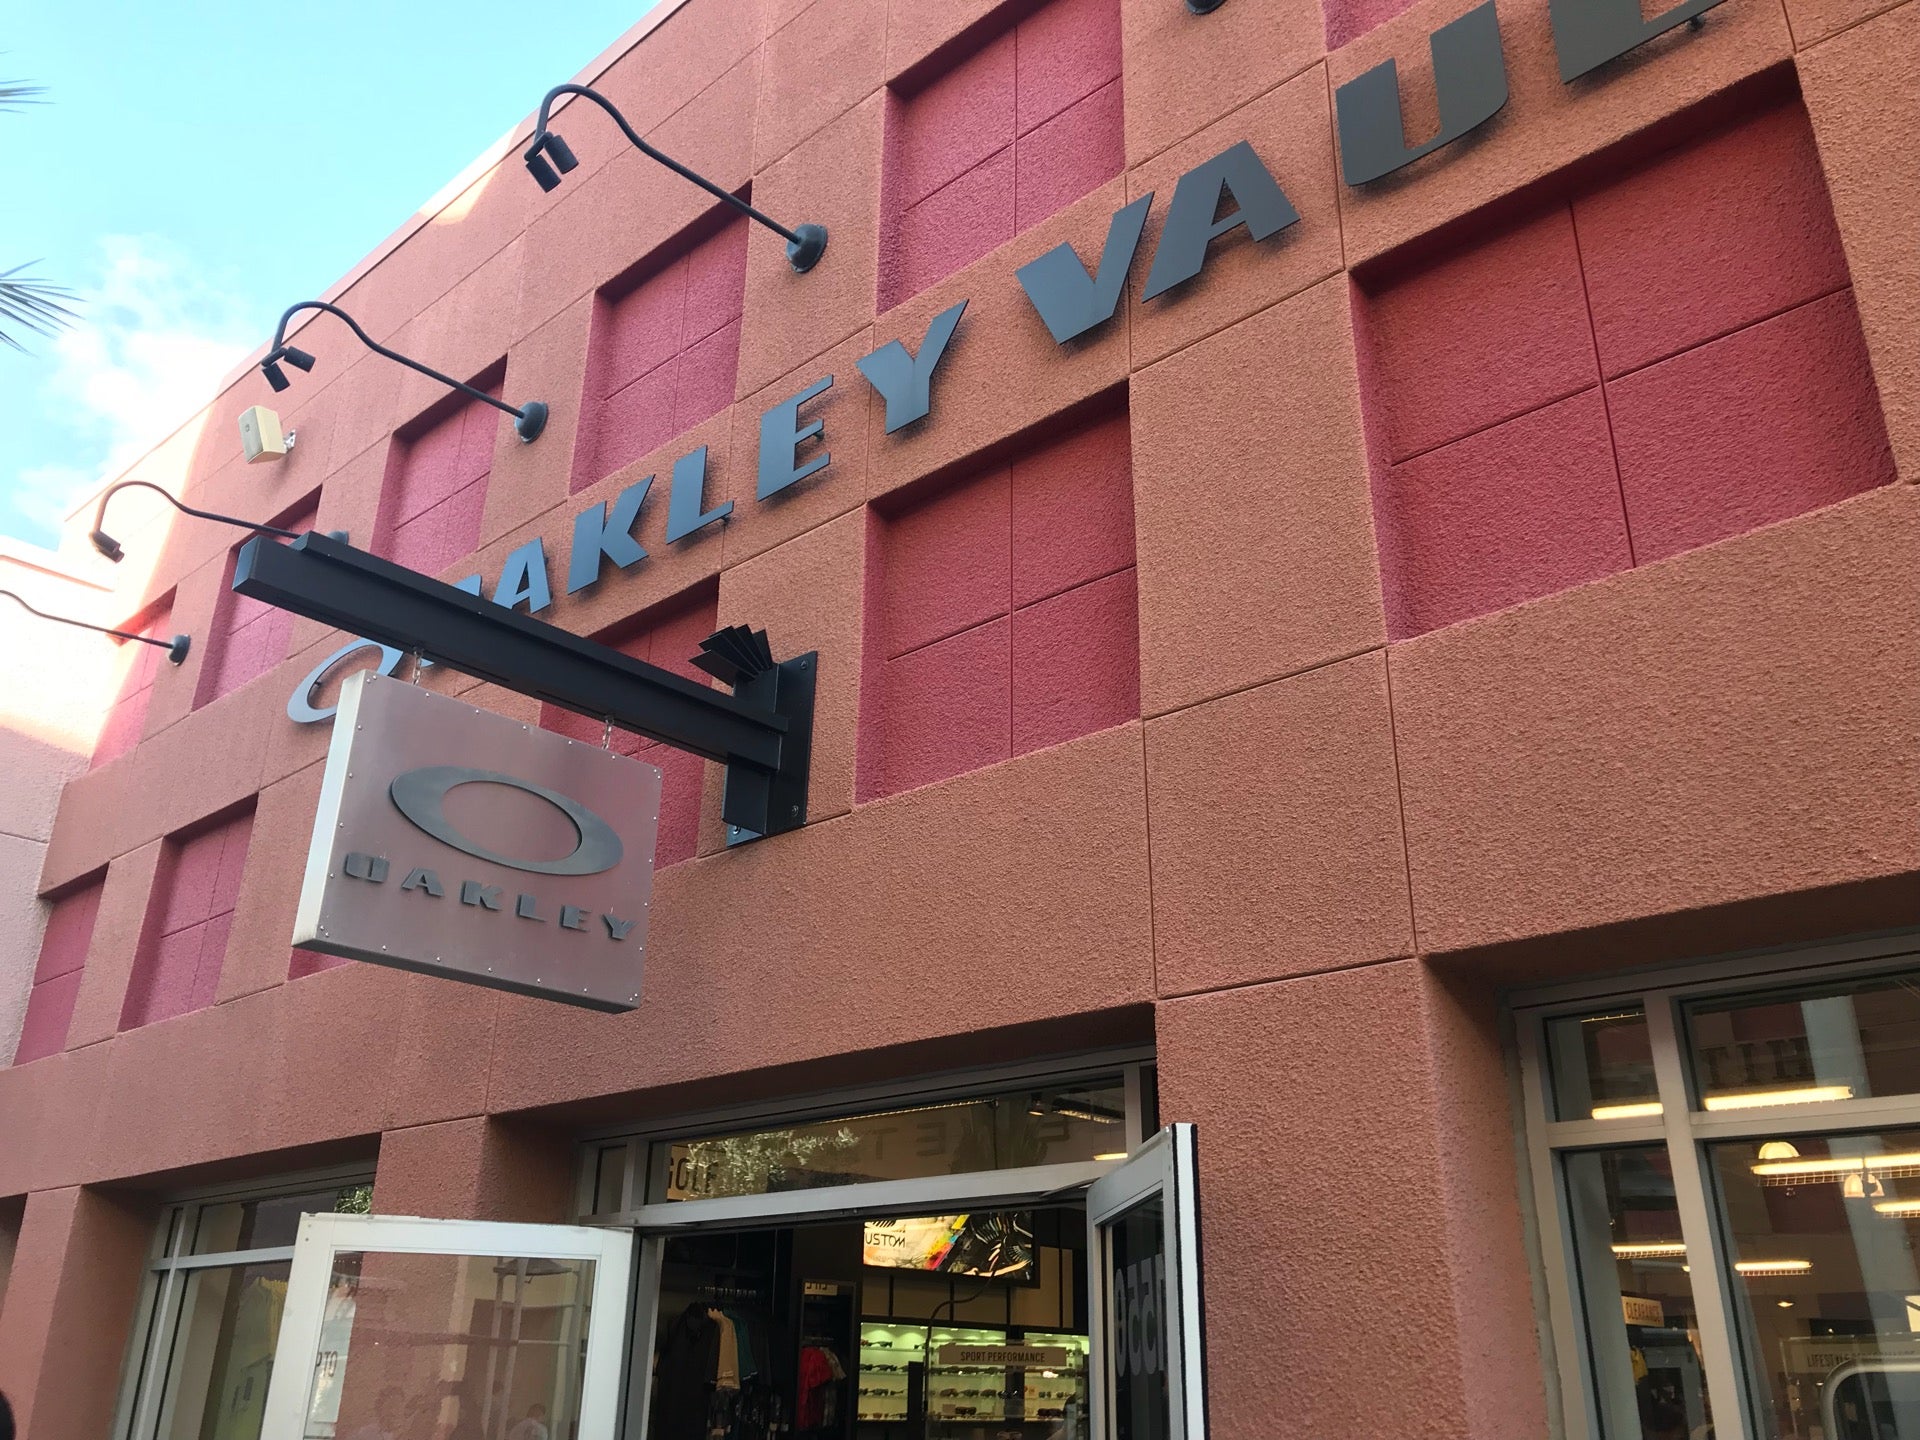 Oakley Vault, 855 S Grand Central Pkwy Las Vegas, NV